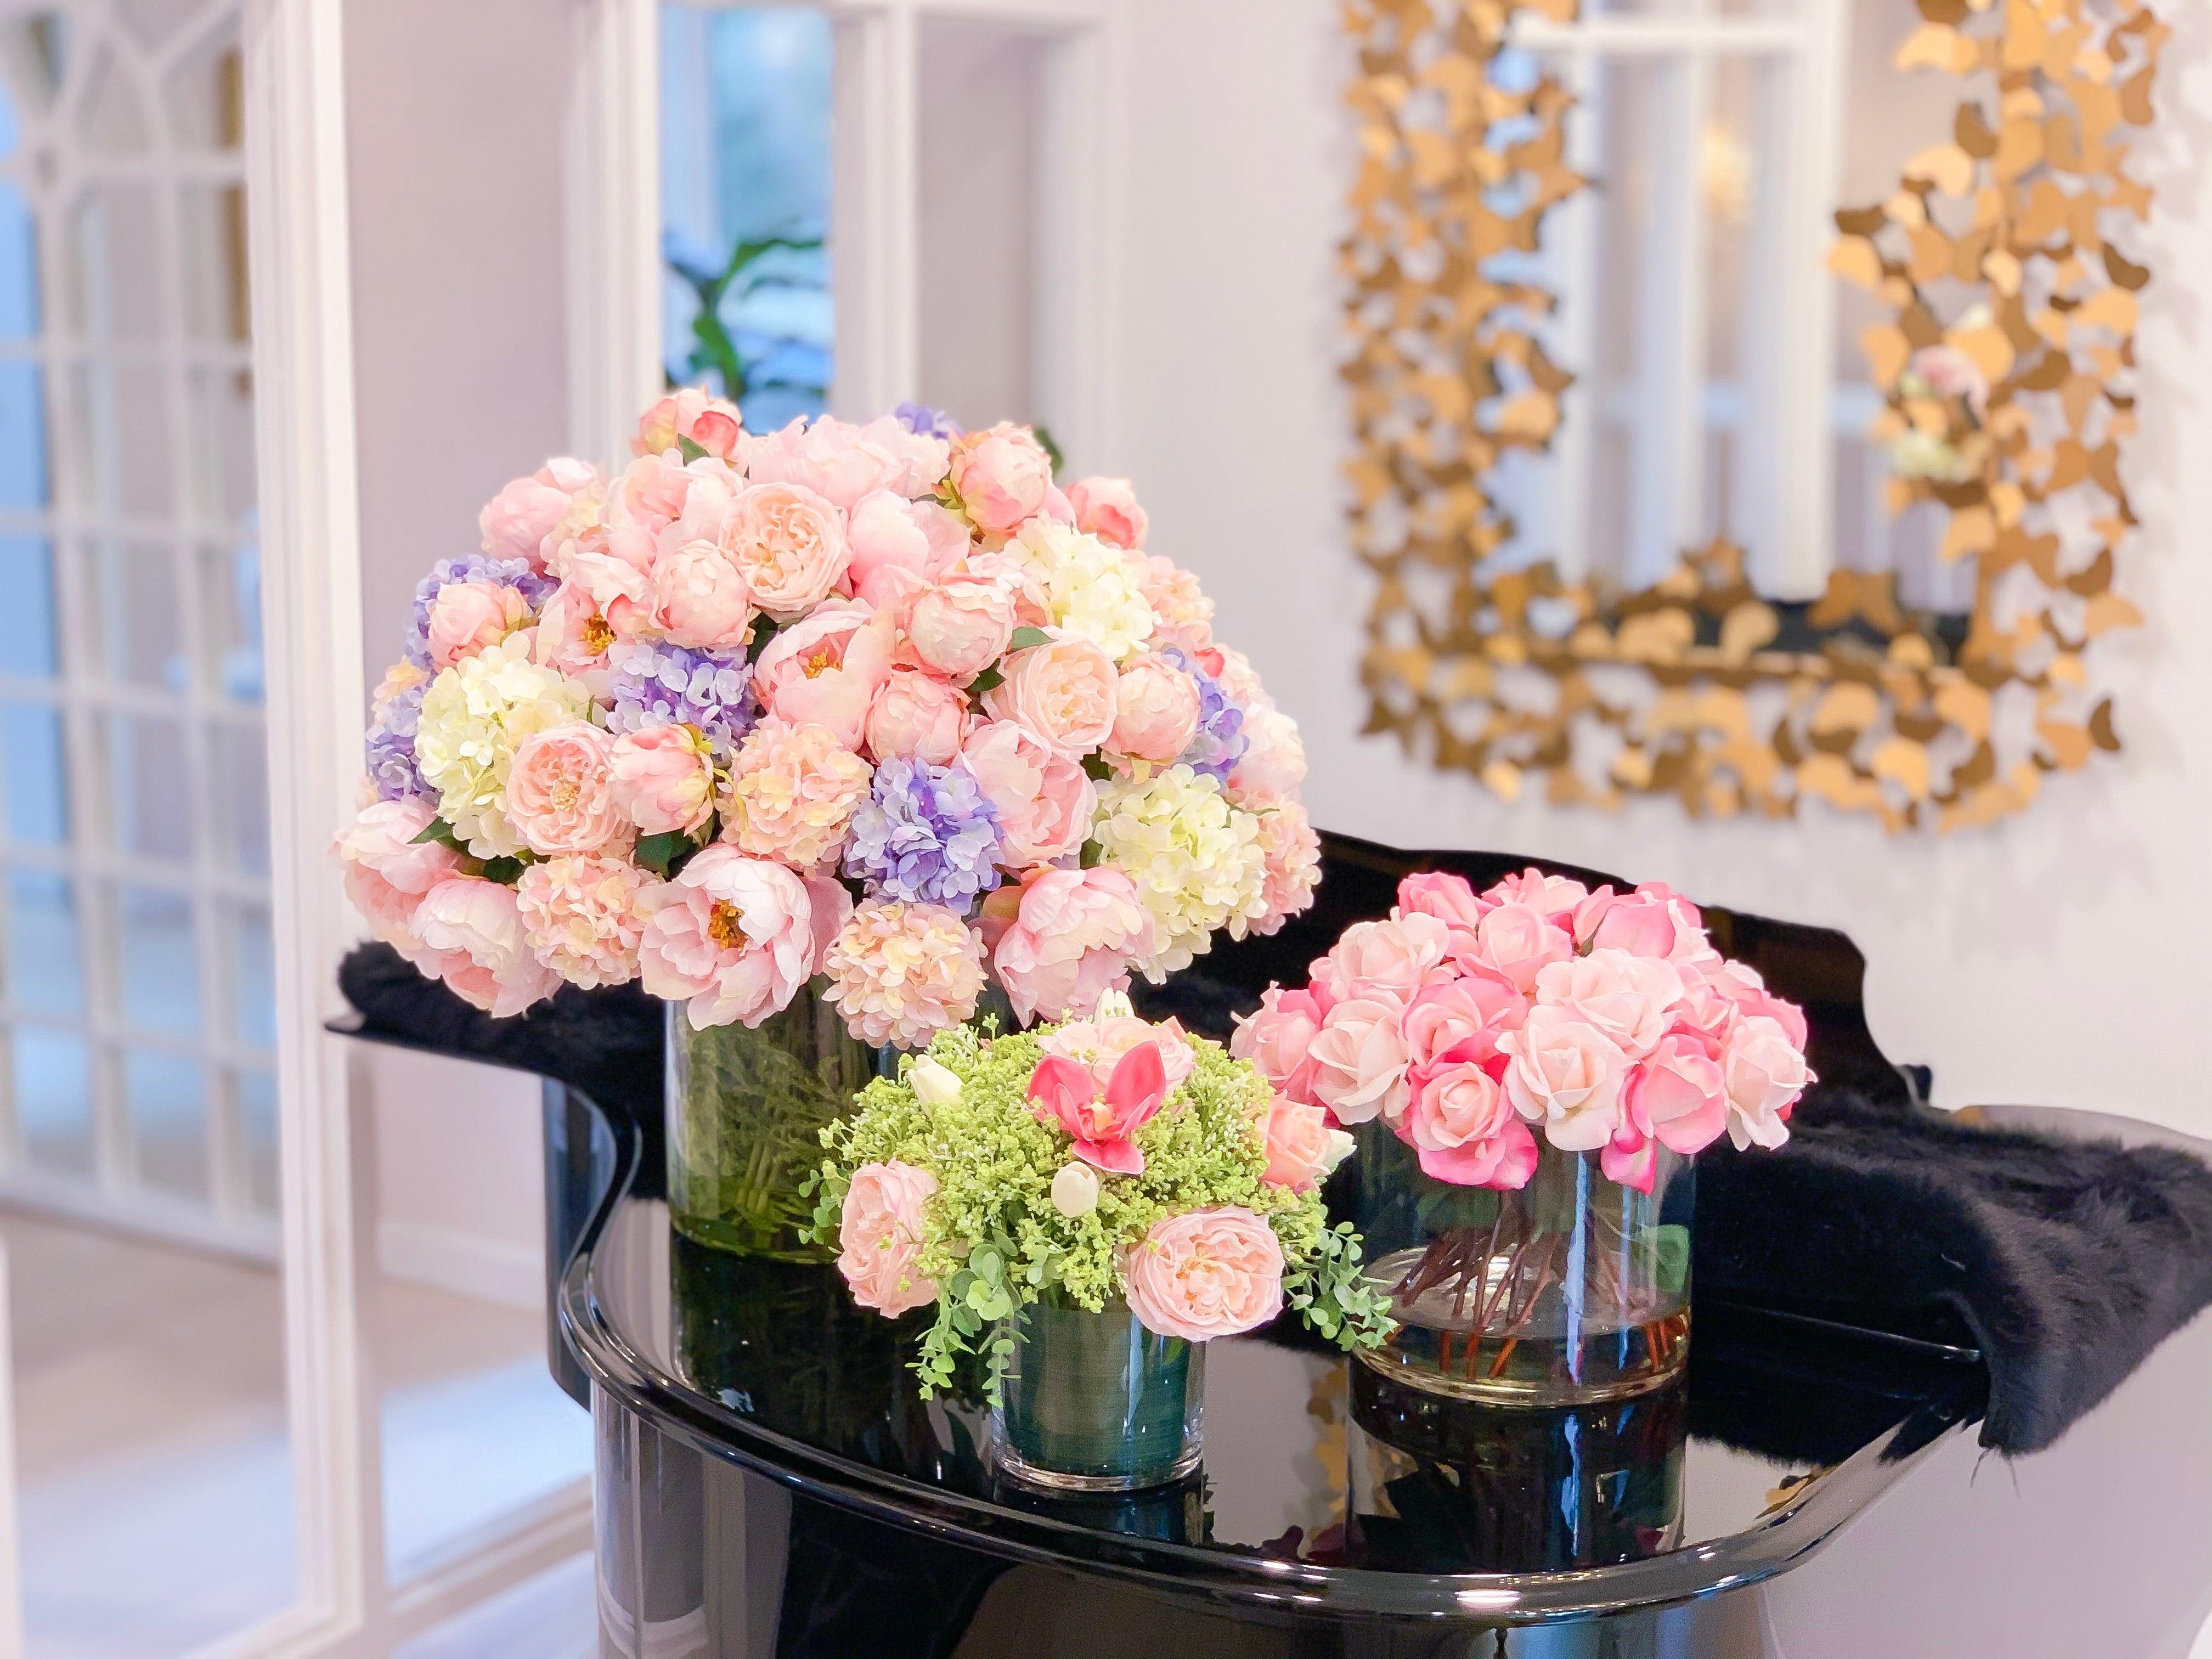 Pink Paradise Arrangement - XXXLarge Centerpiece Arrangement - Lobby Centerpiece-Faux Flowers Arrangement- Finest Artificial Centerpiece - Flovery